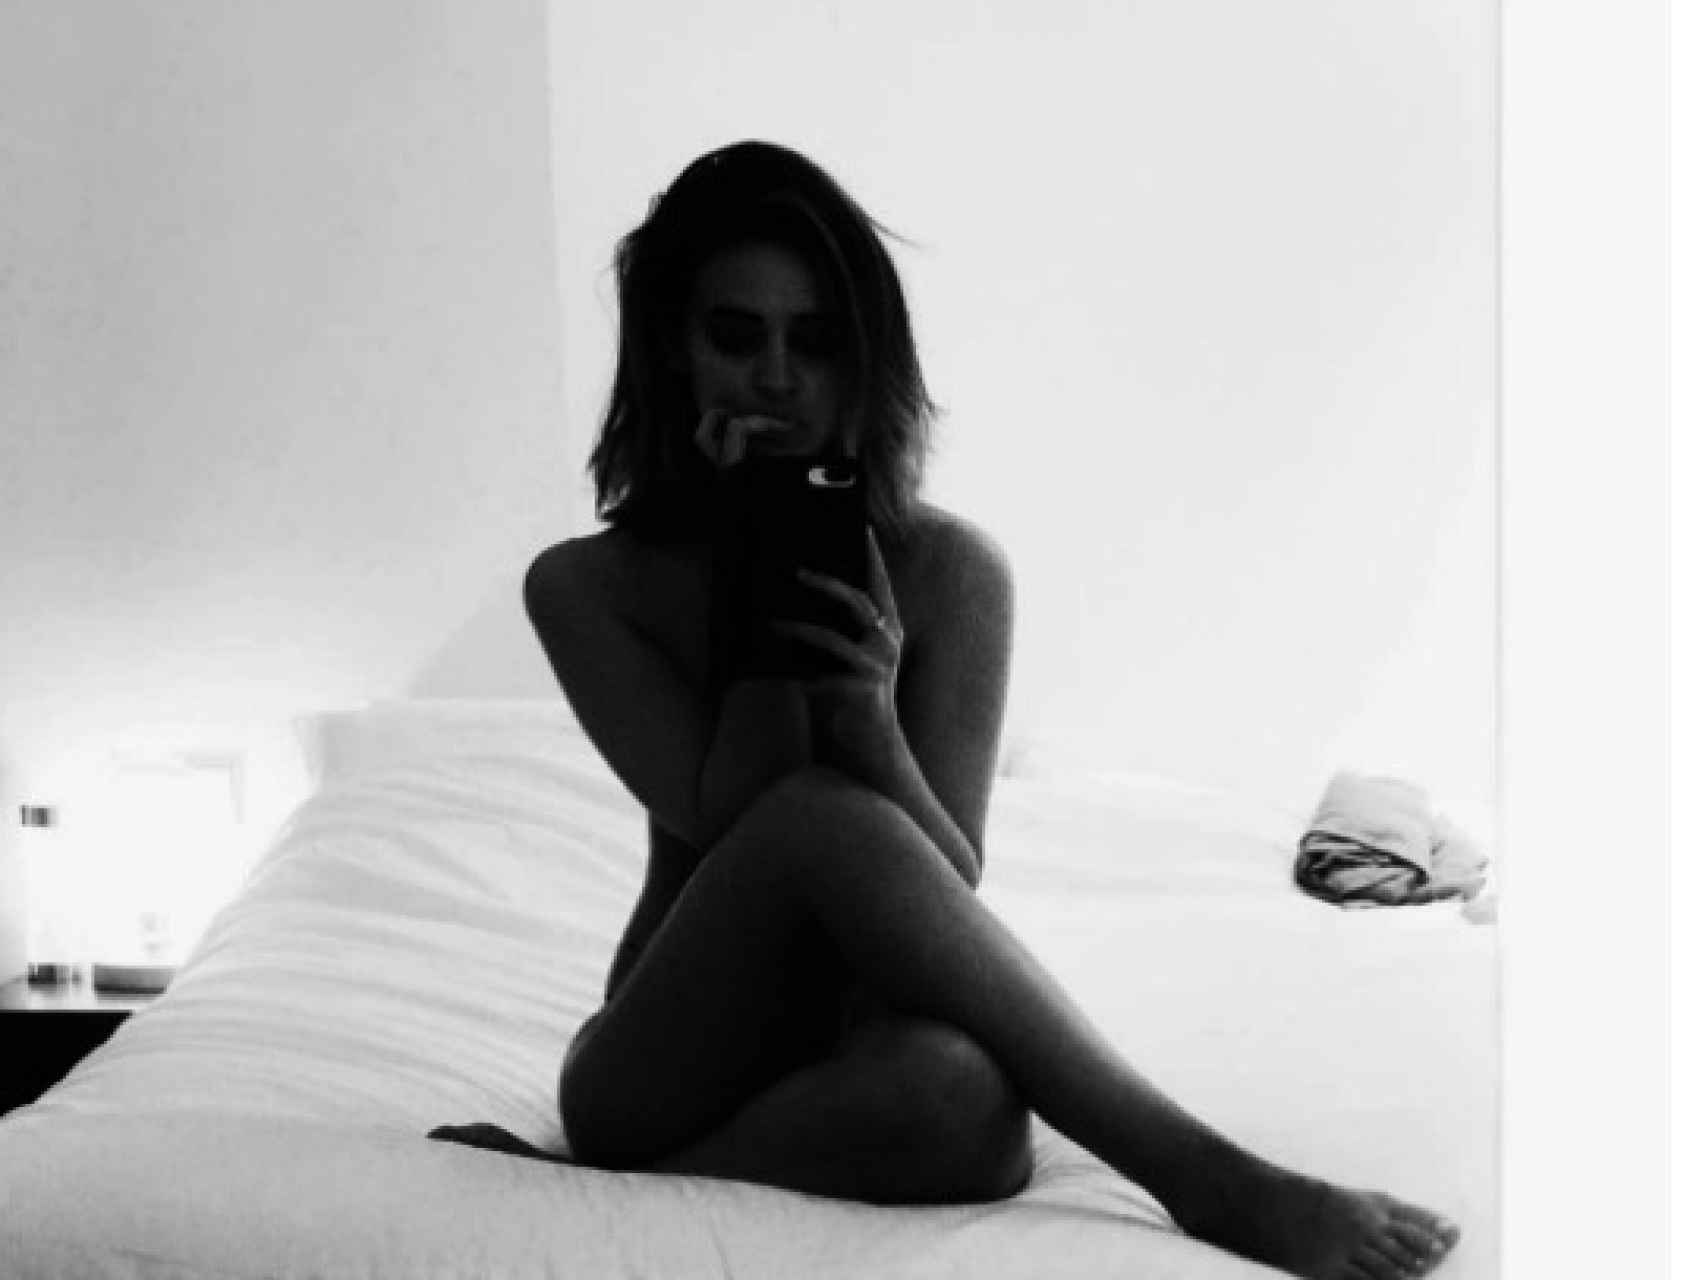 La modelo posa desnuda en su Instagram.